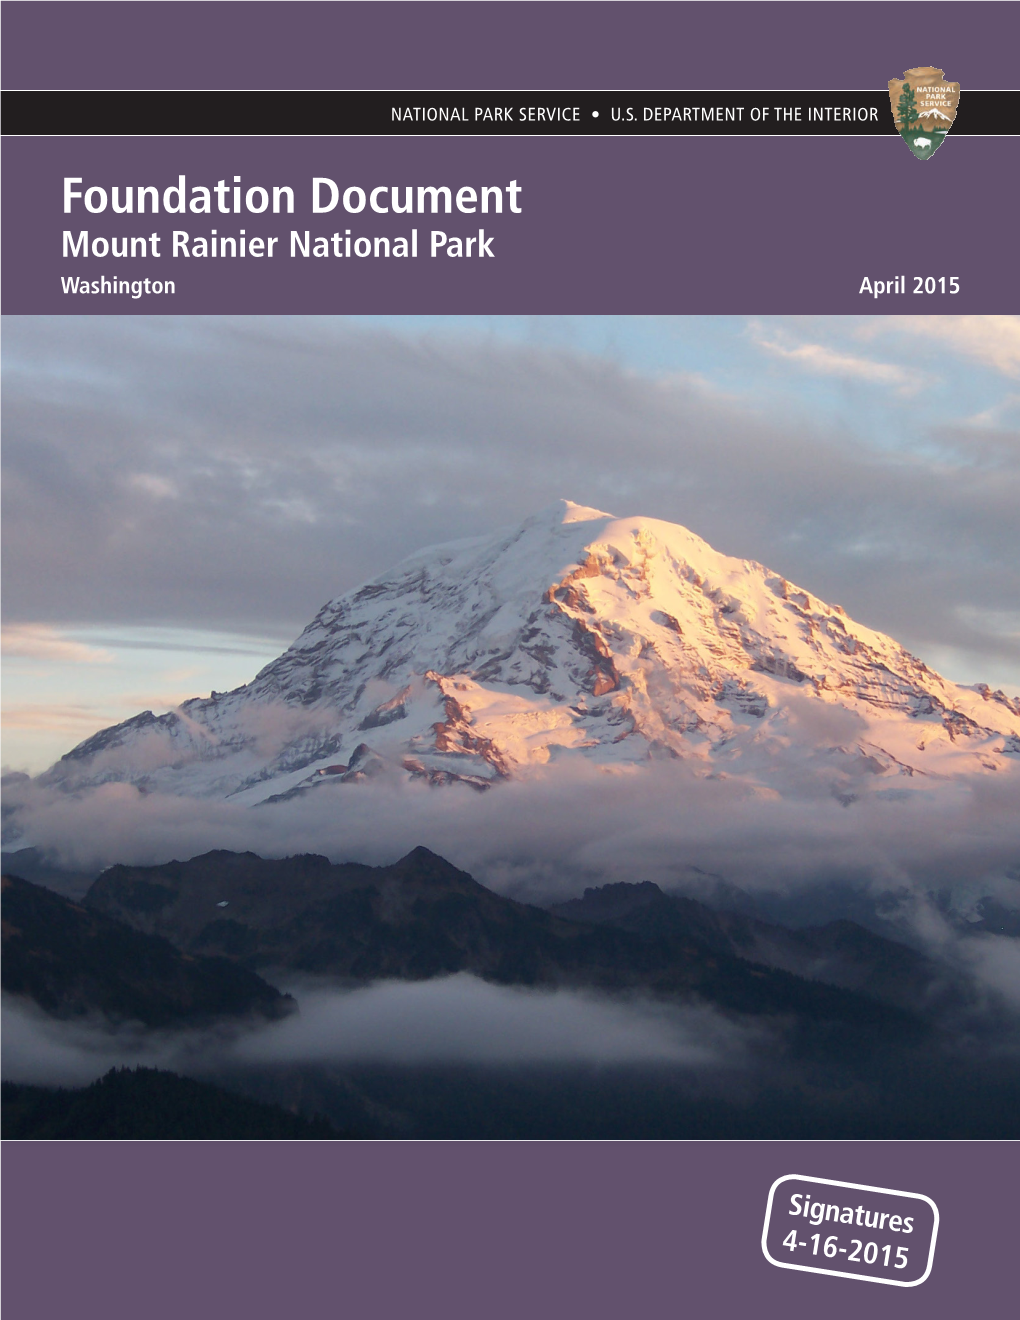 Mount Rainier National Park Foundation Document